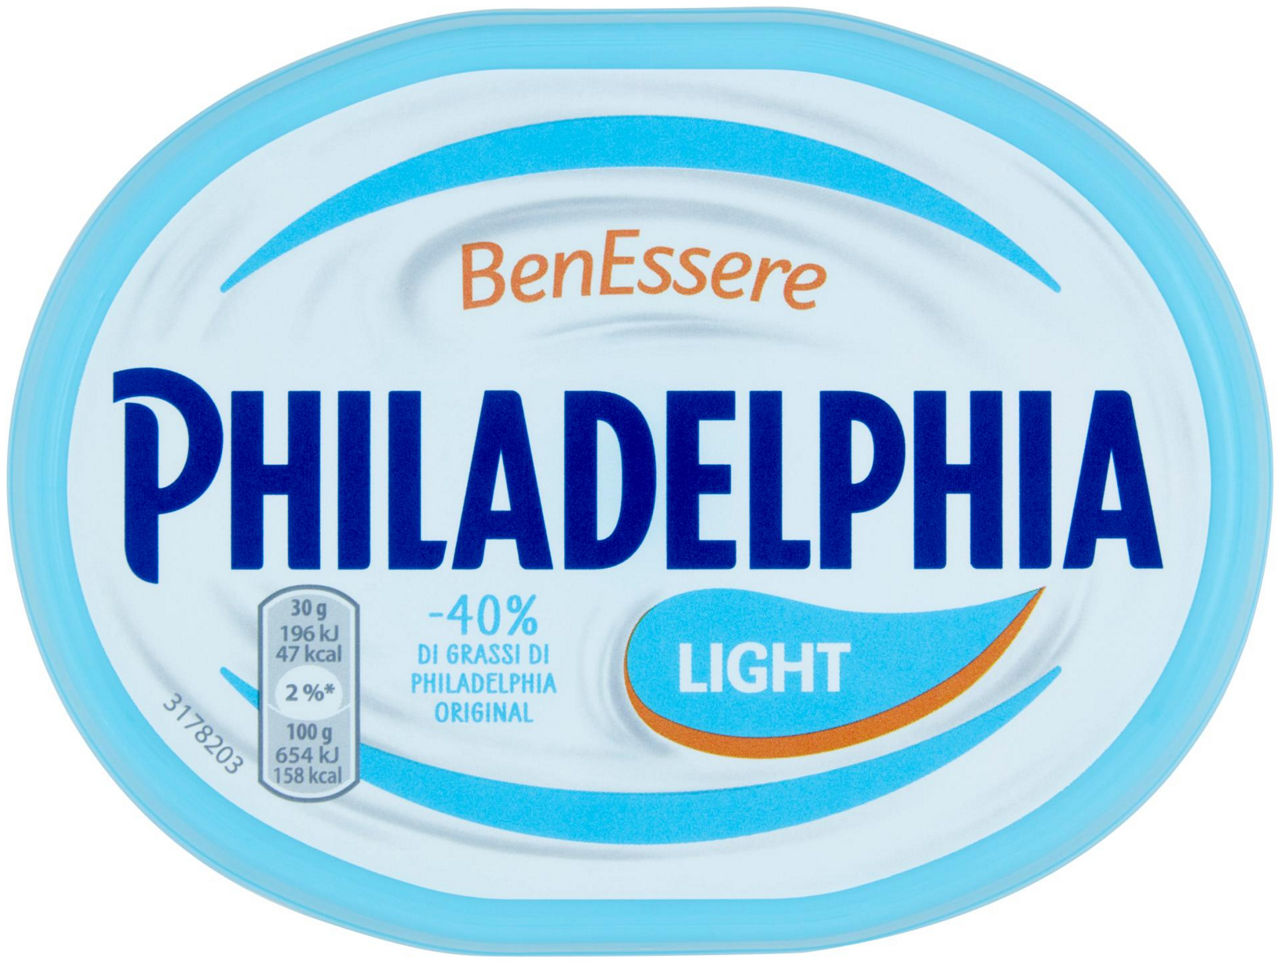 Philadelphia benessere light formaggio fresco spalmabile - 175g